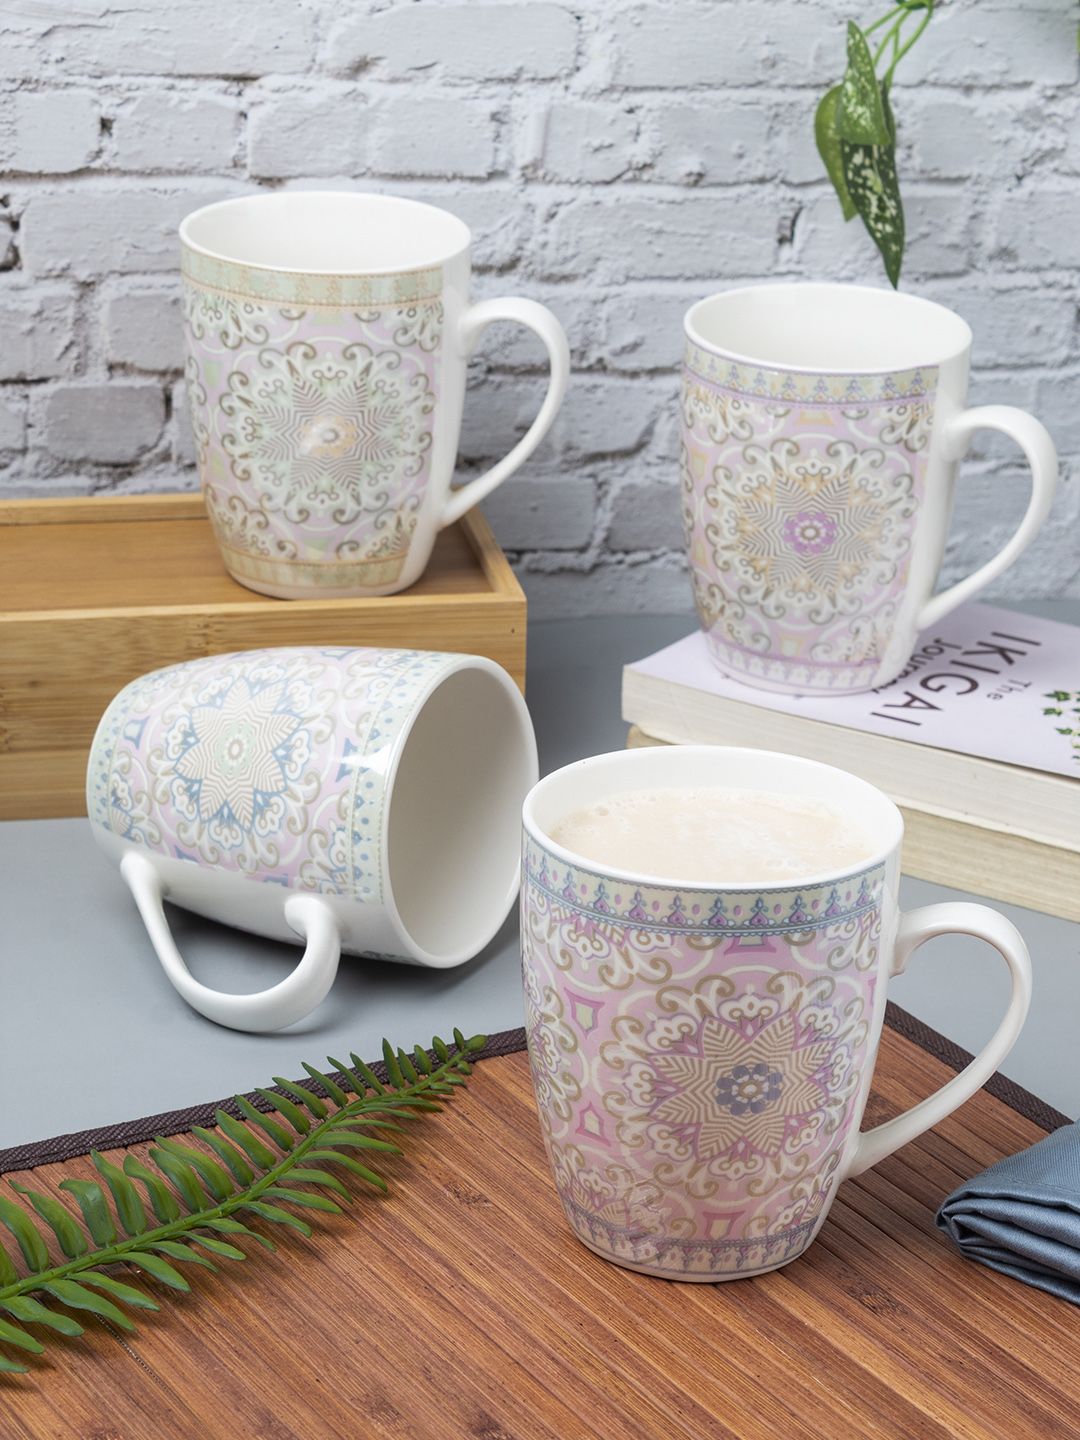 MARKET99 Assorted Ethnic Motifs Printed Ceramic Glossy Mugs Price in India